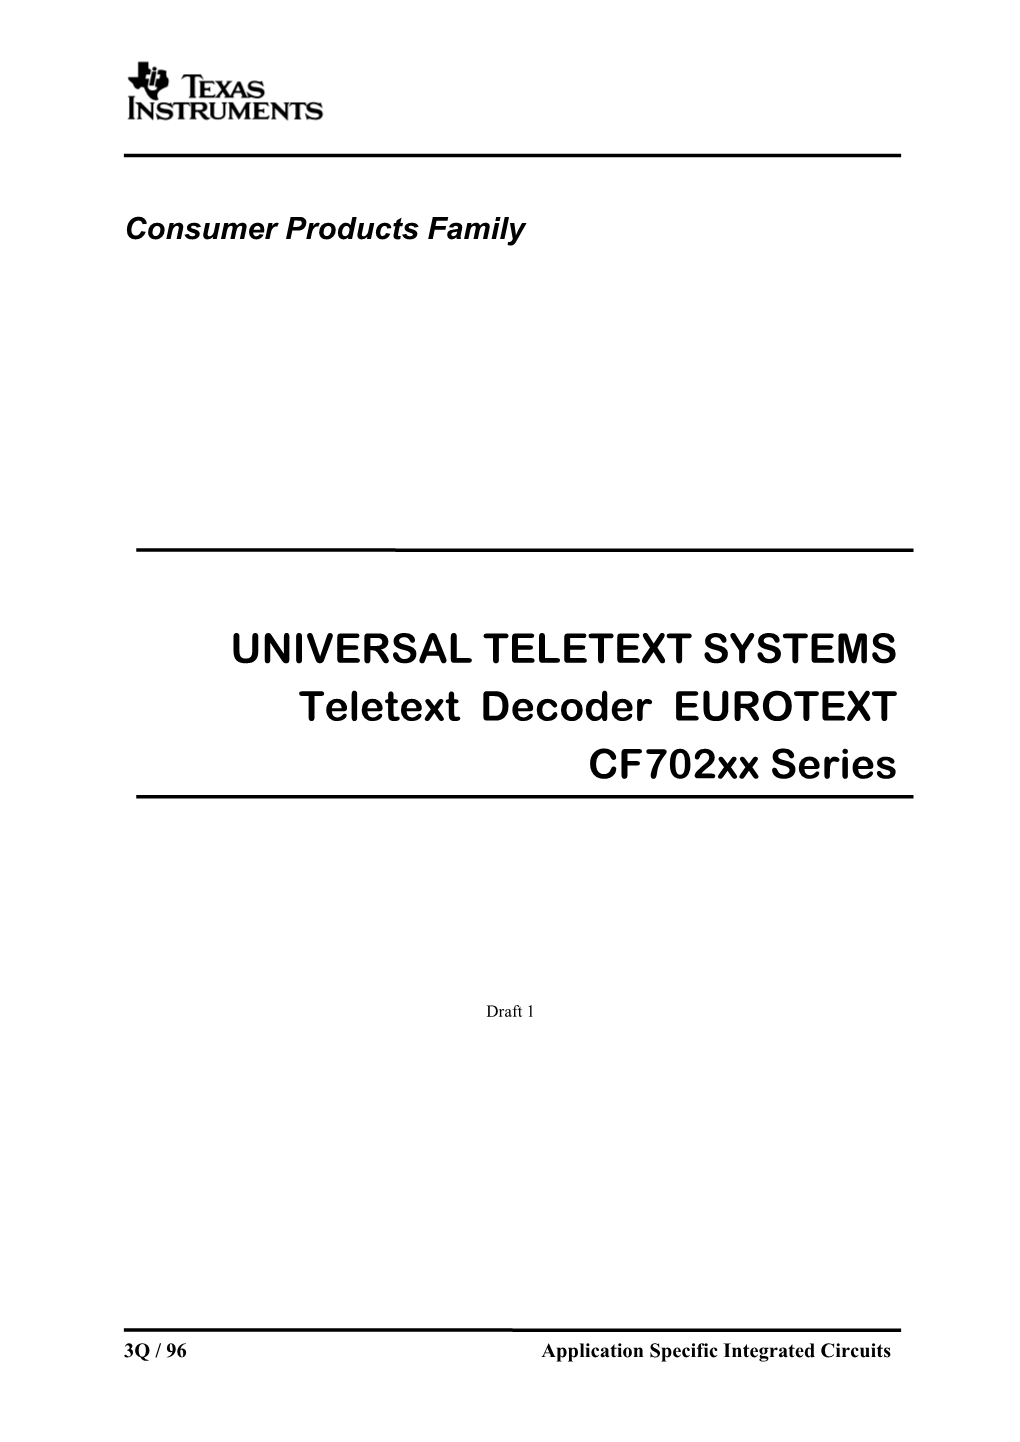 UNIVERSAL TELETEXT SYSTEMS Teletext Decoder EUROTEXT Cf702xx Series